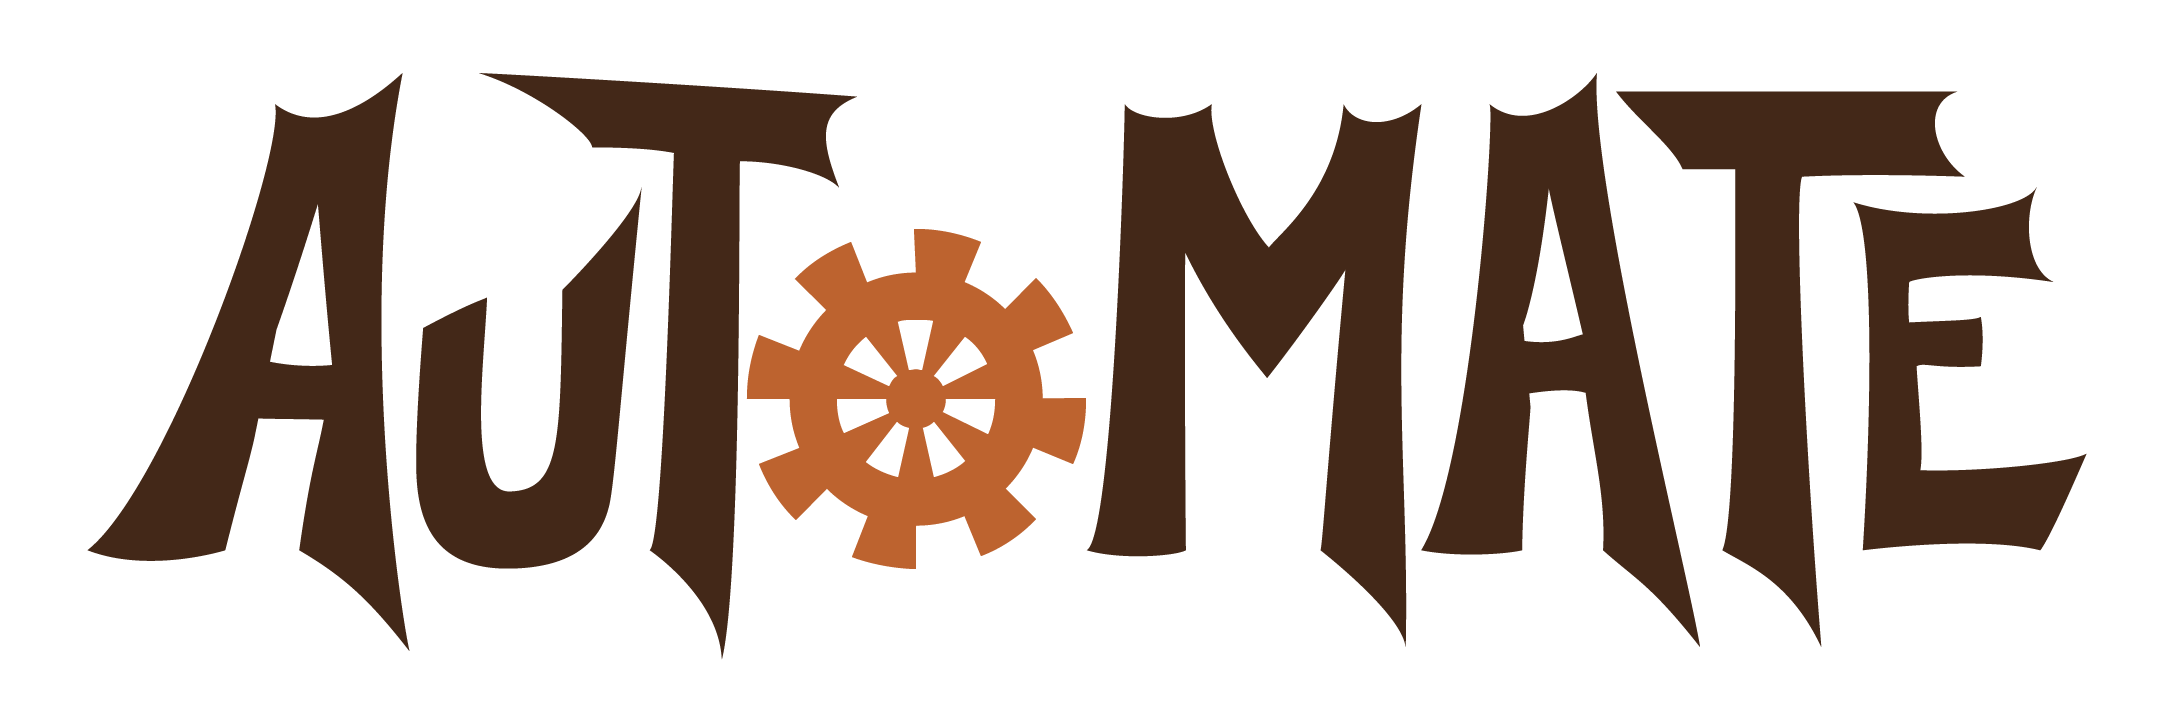 Restaurant Automates' logo